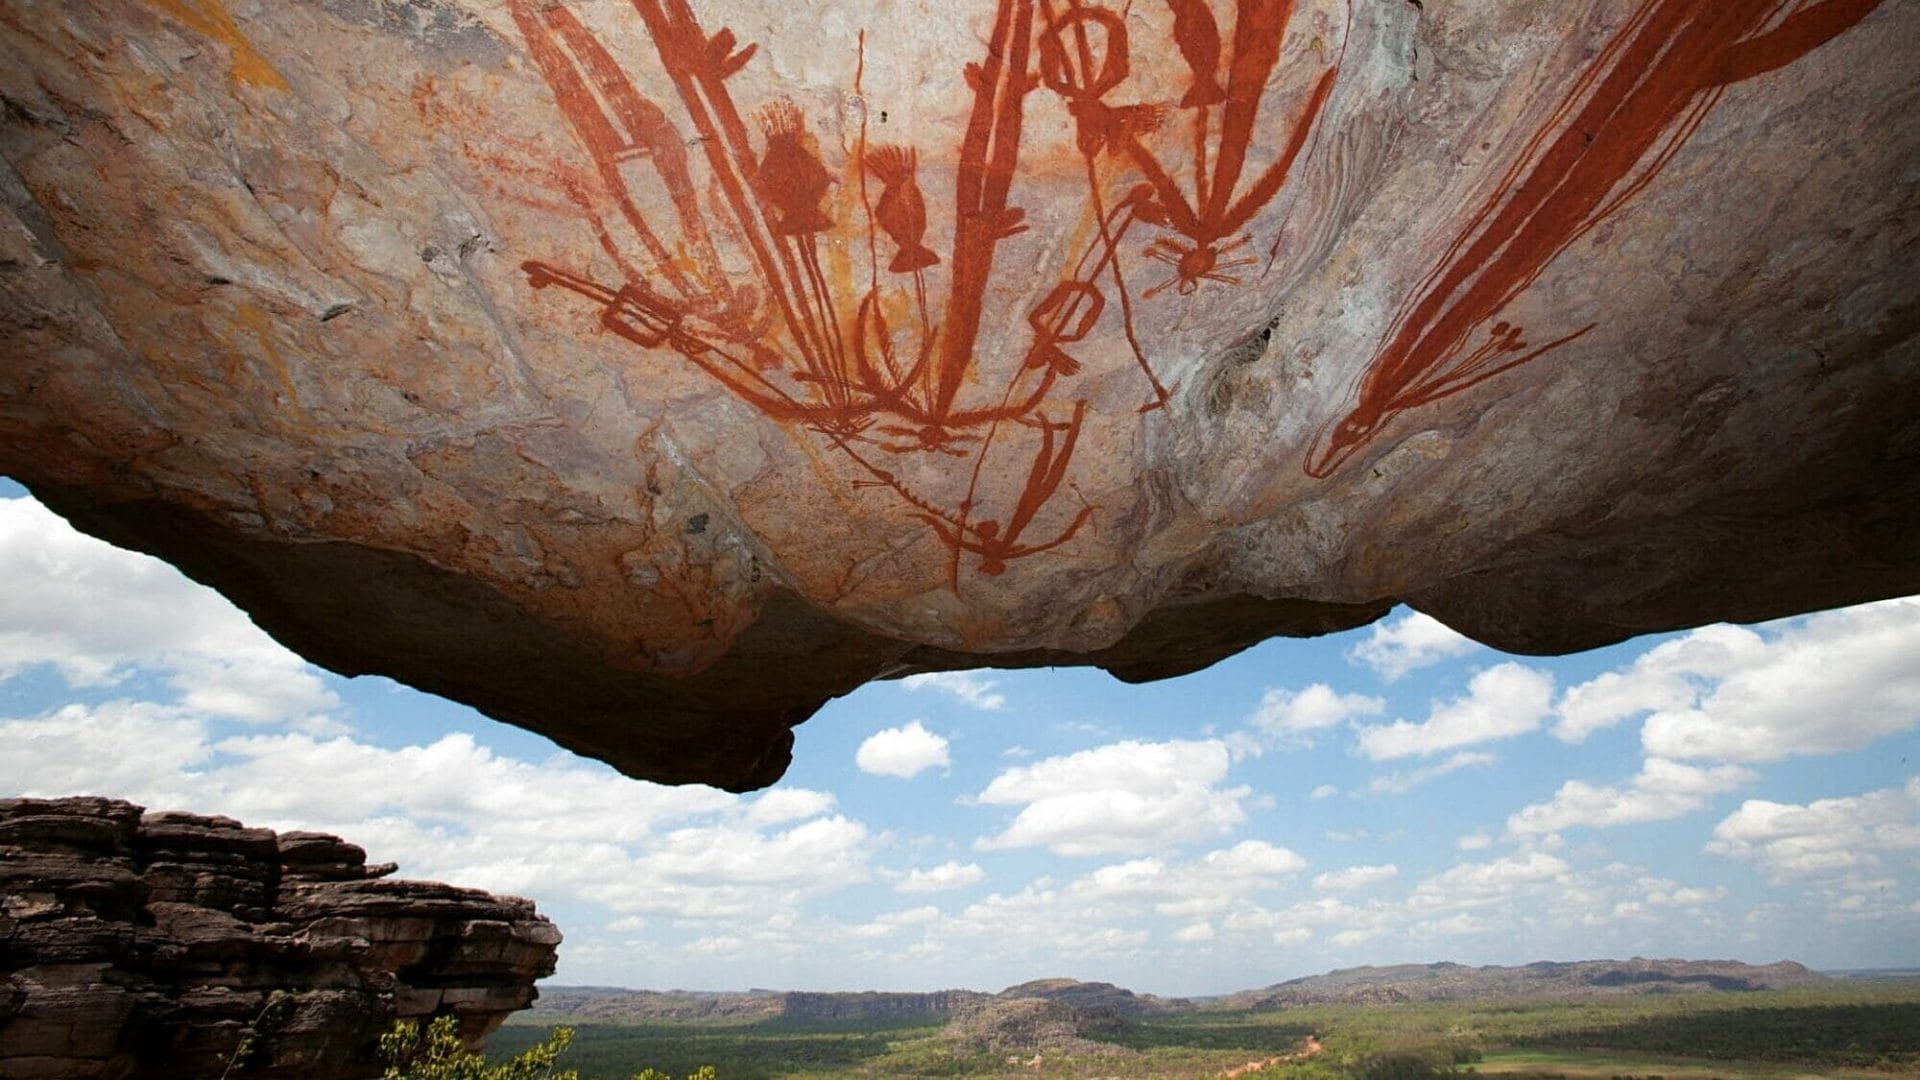 Ancient Aboriginal rock art on a cliff overhang in Arnhem Land.